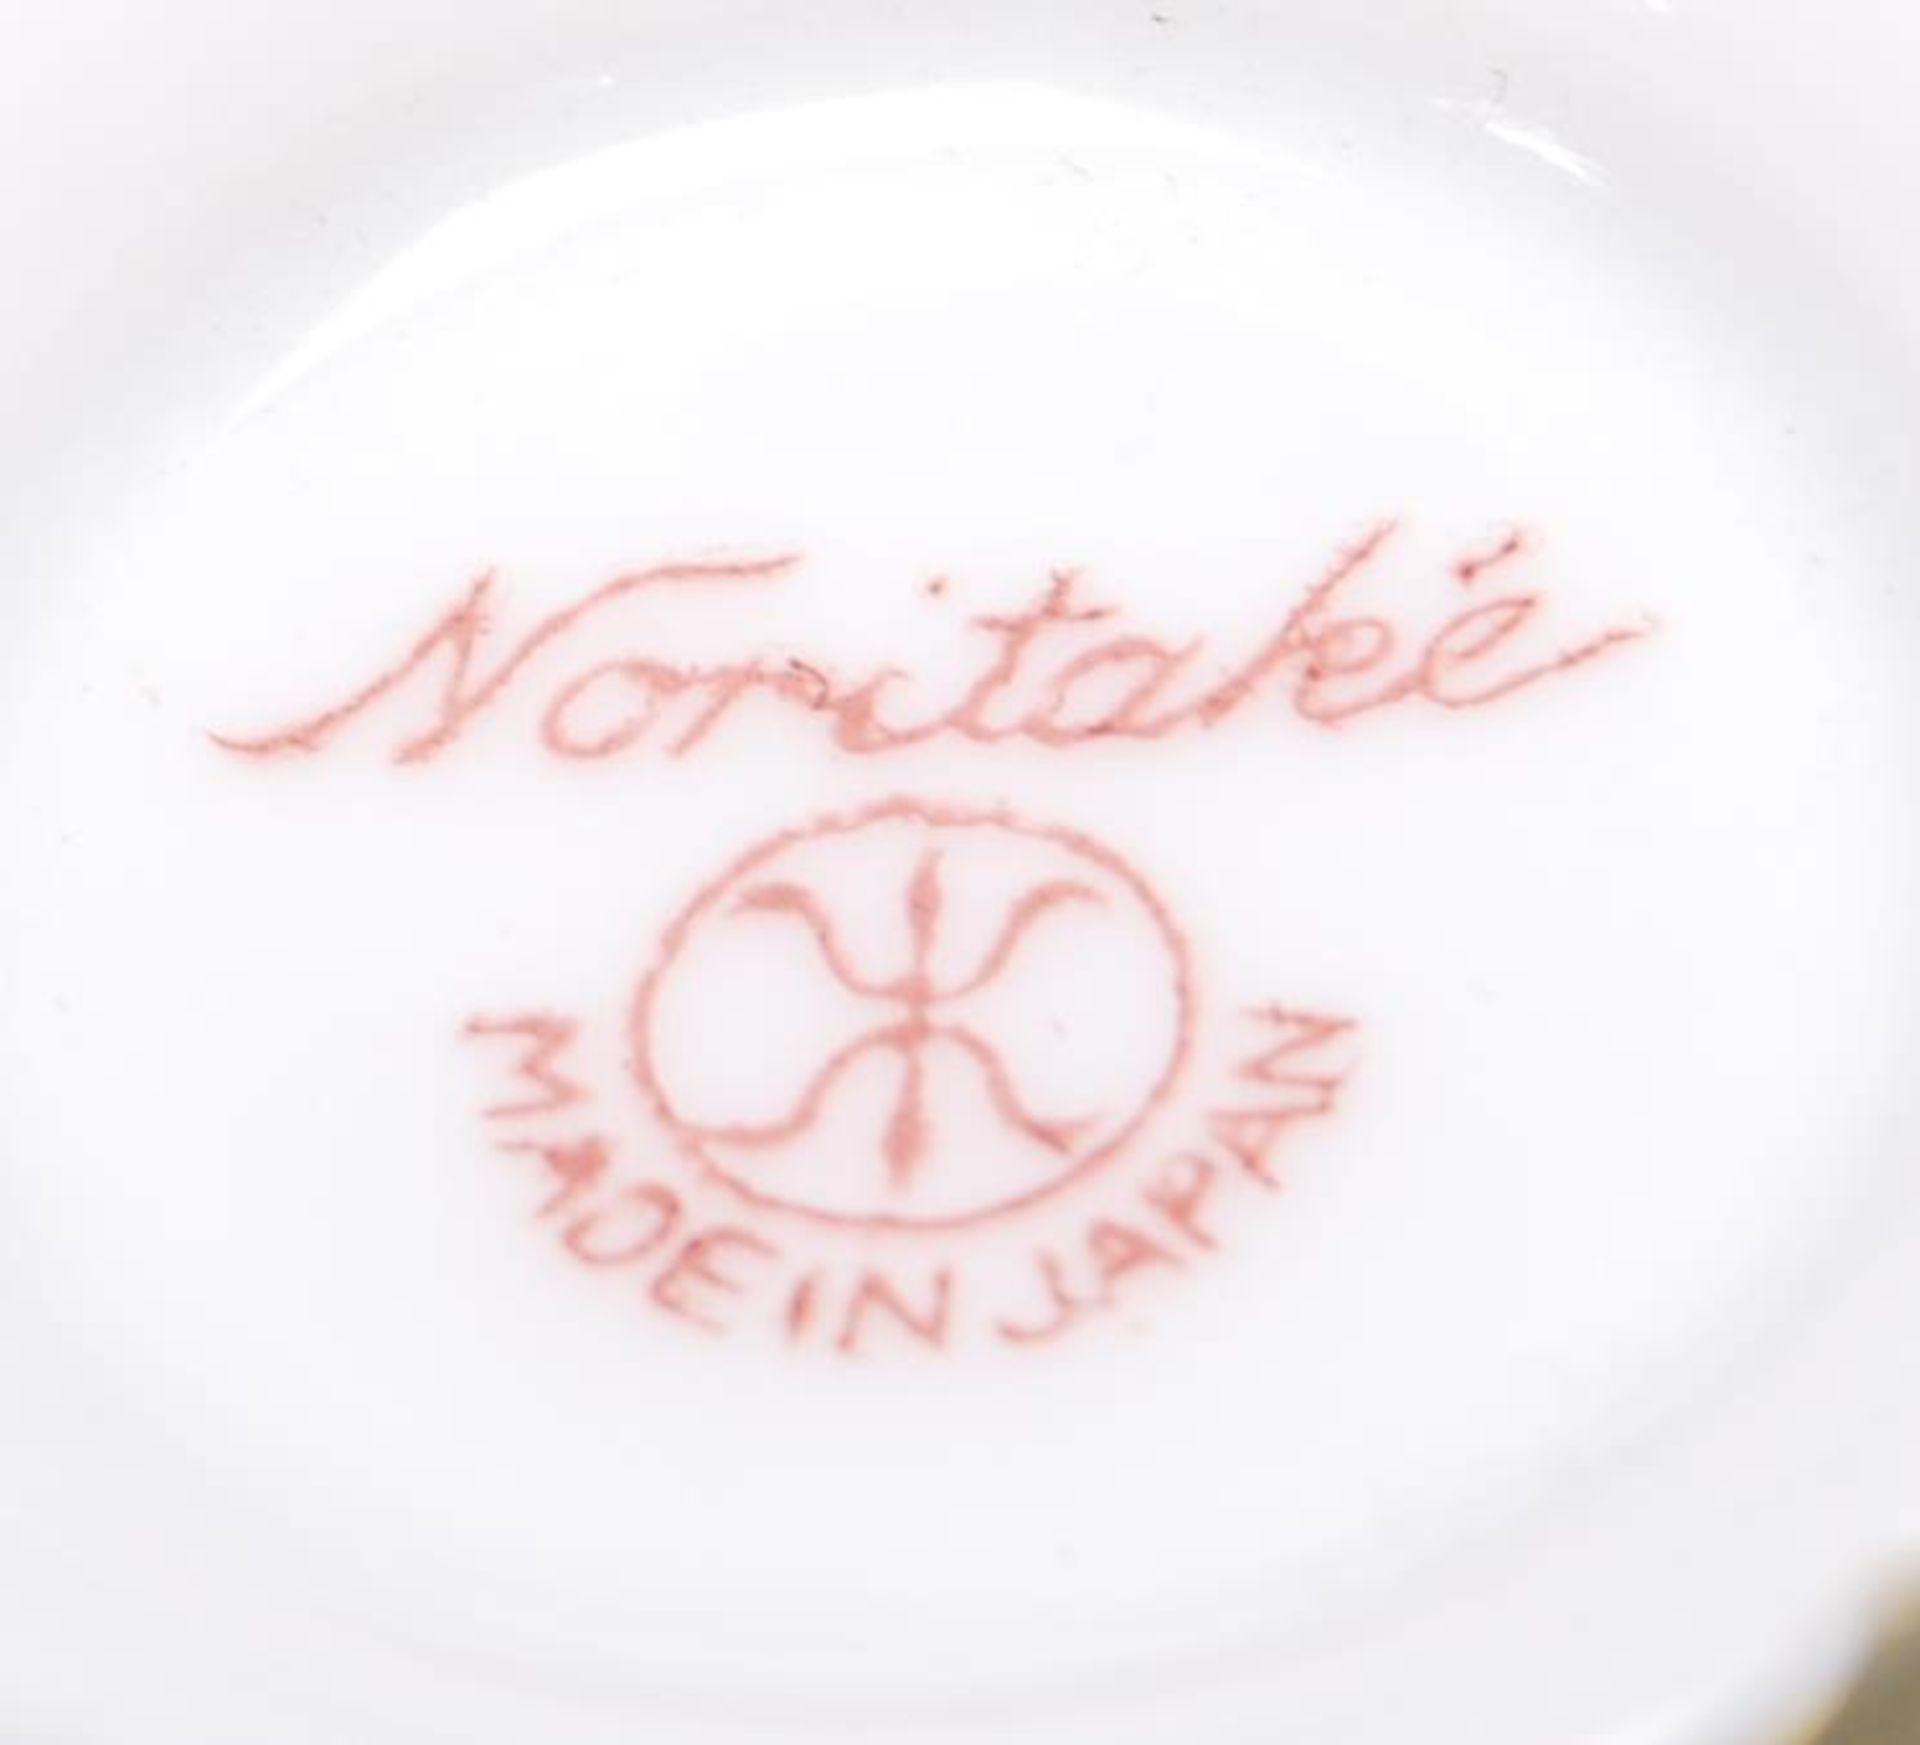 ANTIQUE EARLY 20TH CENTURY NORITAKE FINE CHINA TEA SERVICE - Image 8 of 8